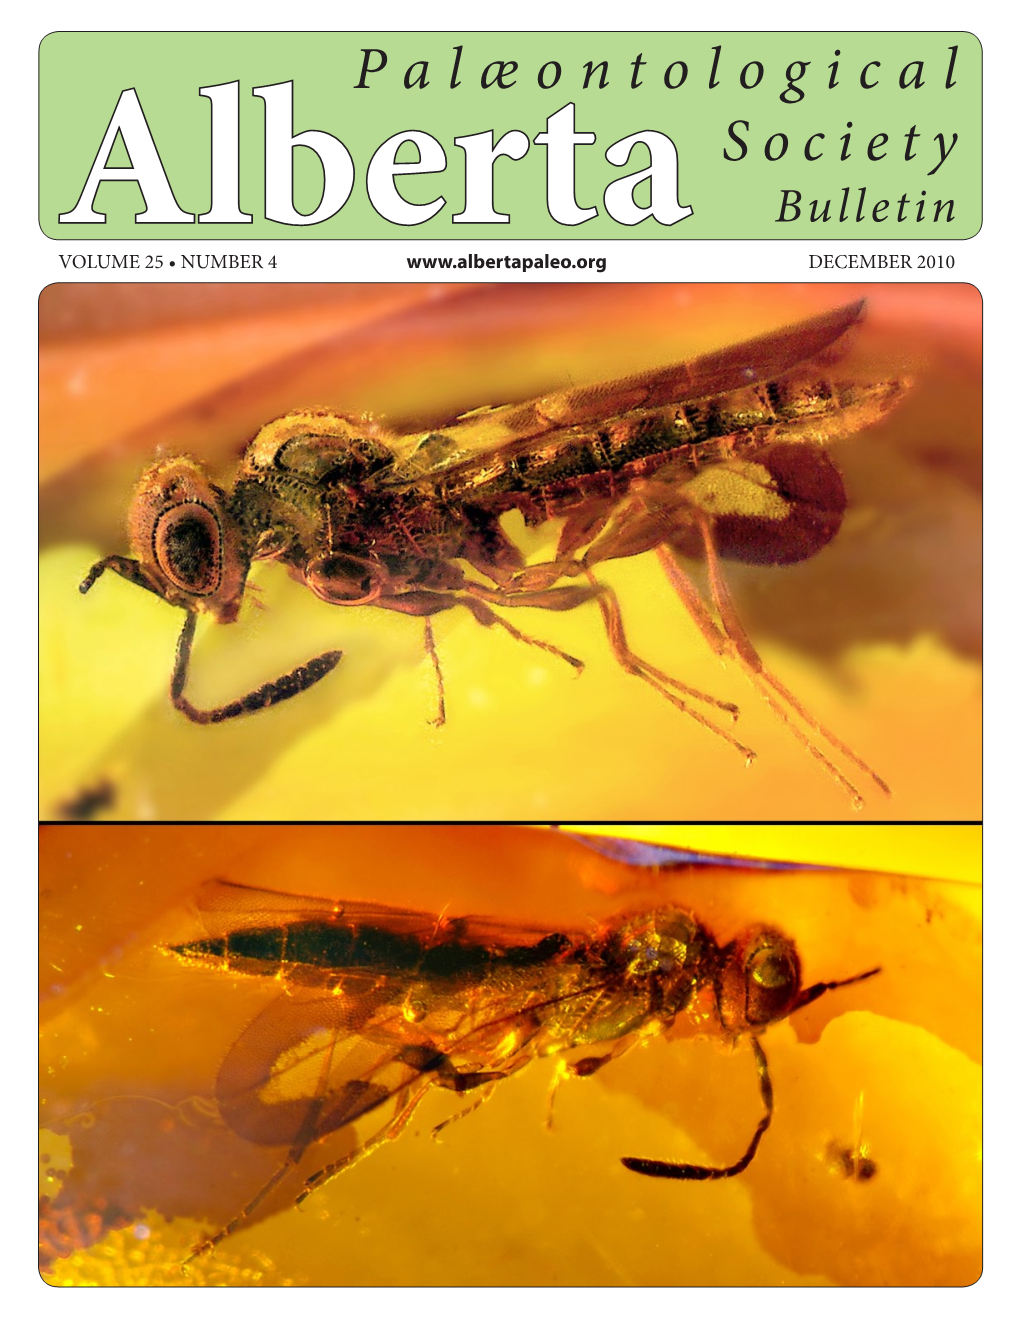 Alberta Palaeontological Society Bulletin December 2010